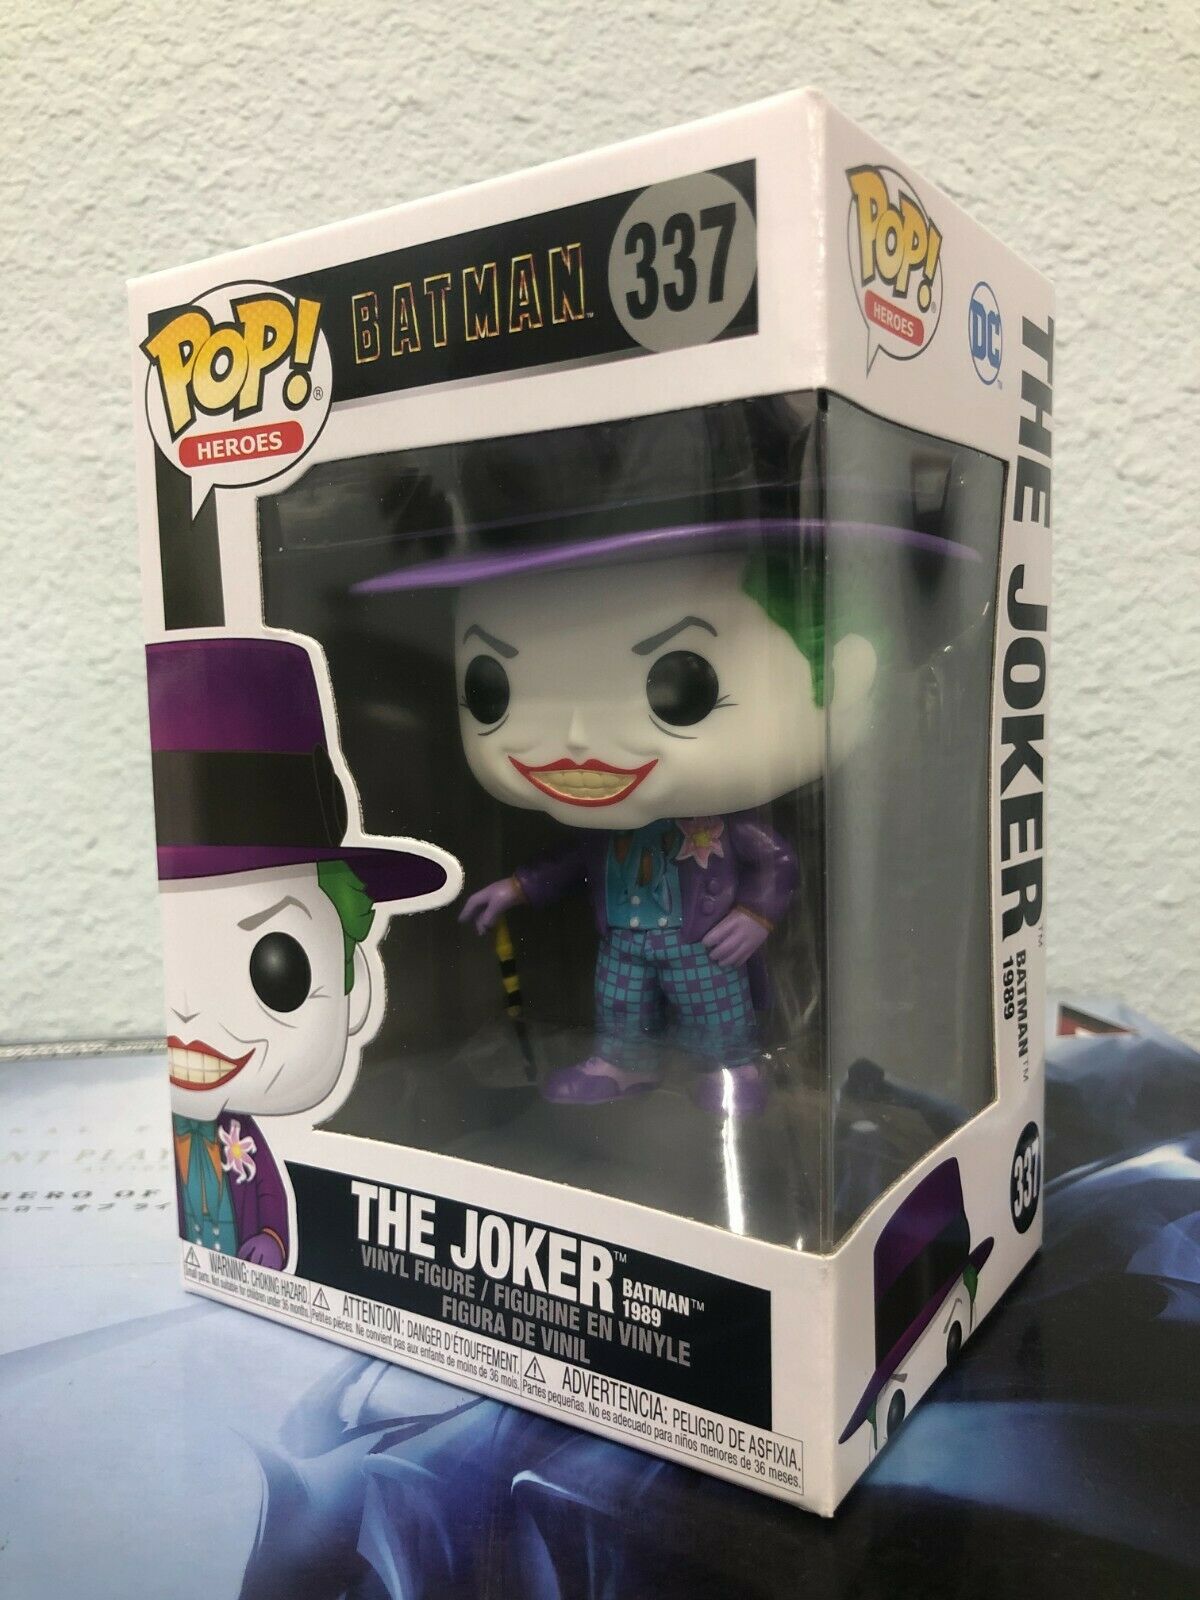 Batman 1989 Joker Funko Pop! Vinyl Figure #337